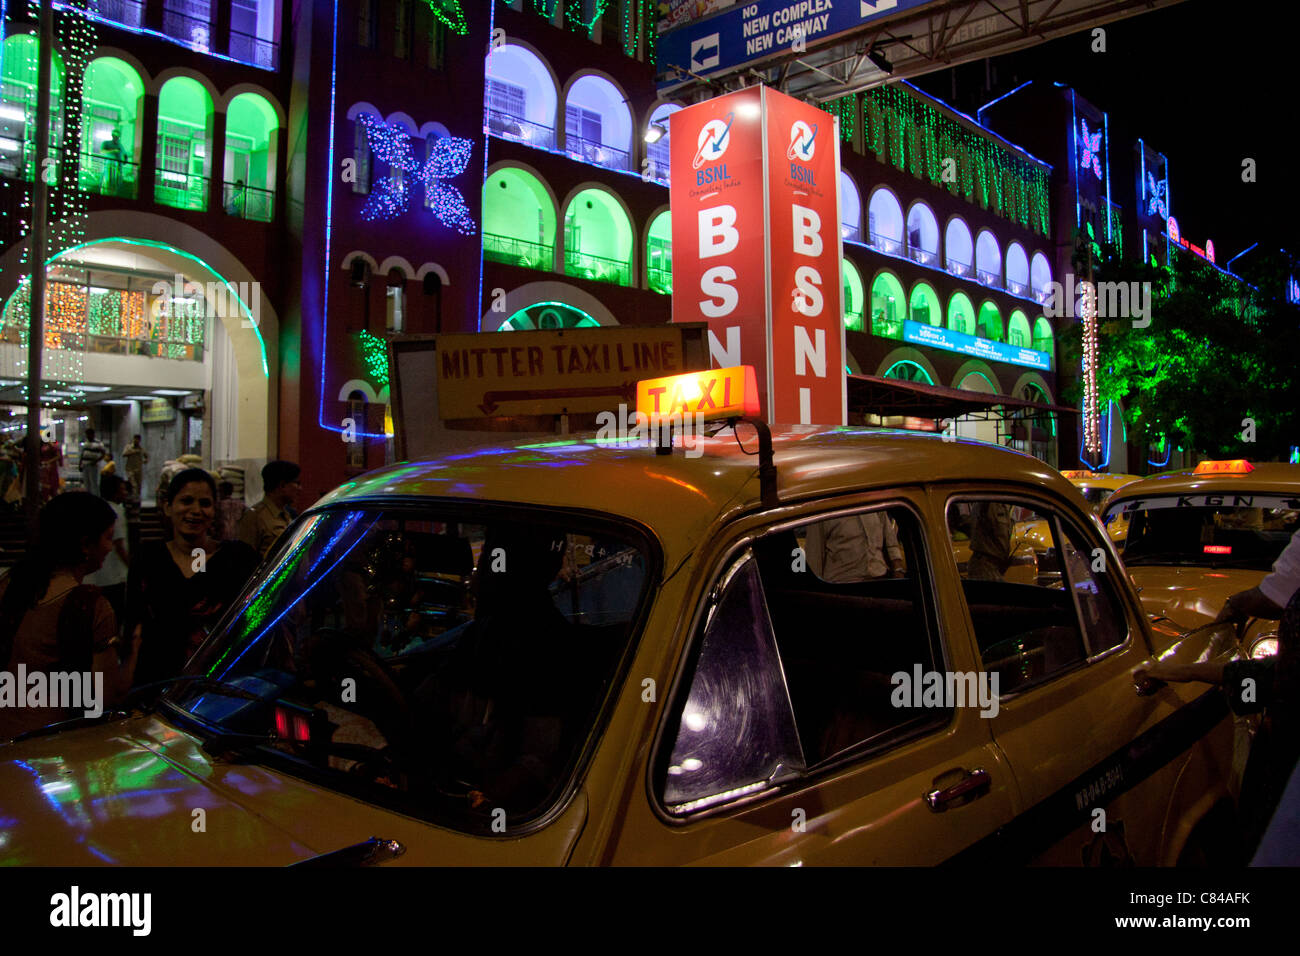 Howrah station illuminated for Durga puja festival in Kolkata (Calcutta), West Bengal, India. Stock Photo